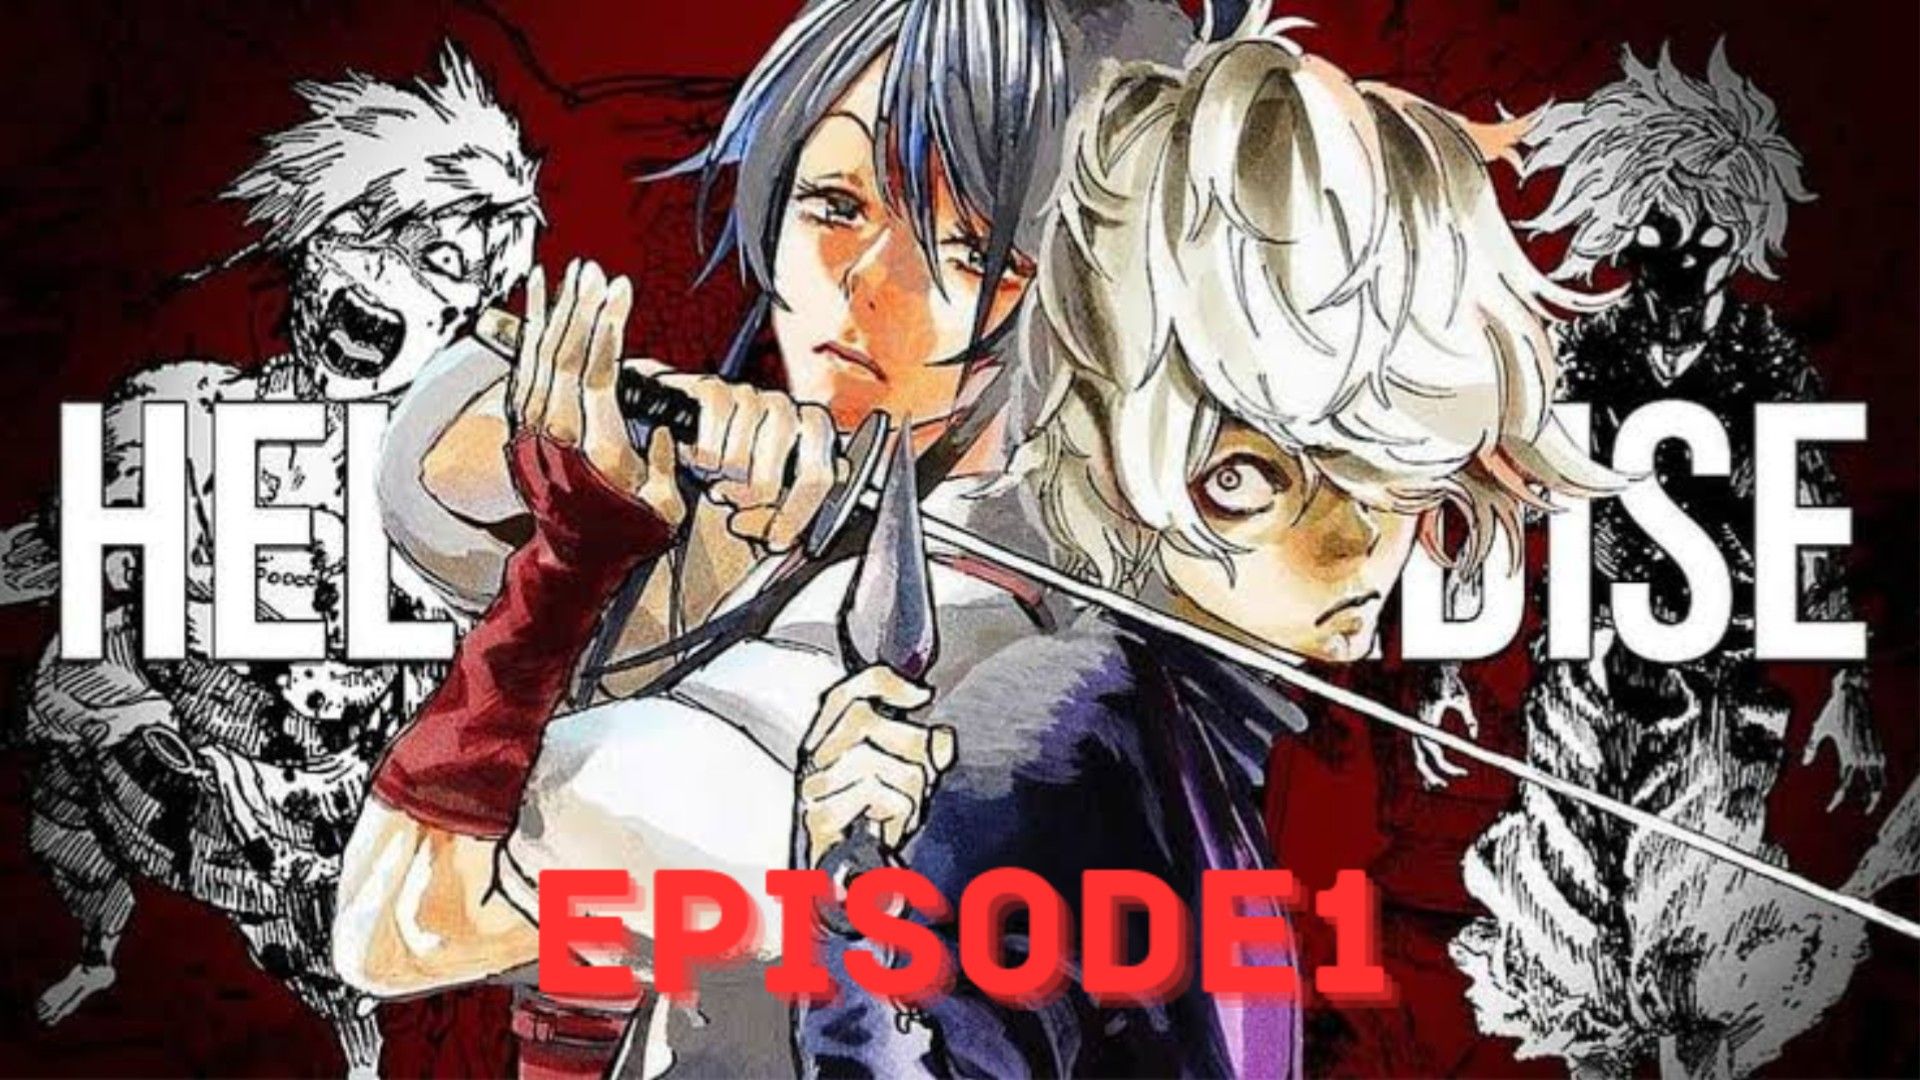 Jigokuraku (Hell's Paradise) Season 1 Episode 1 (English Subtitle